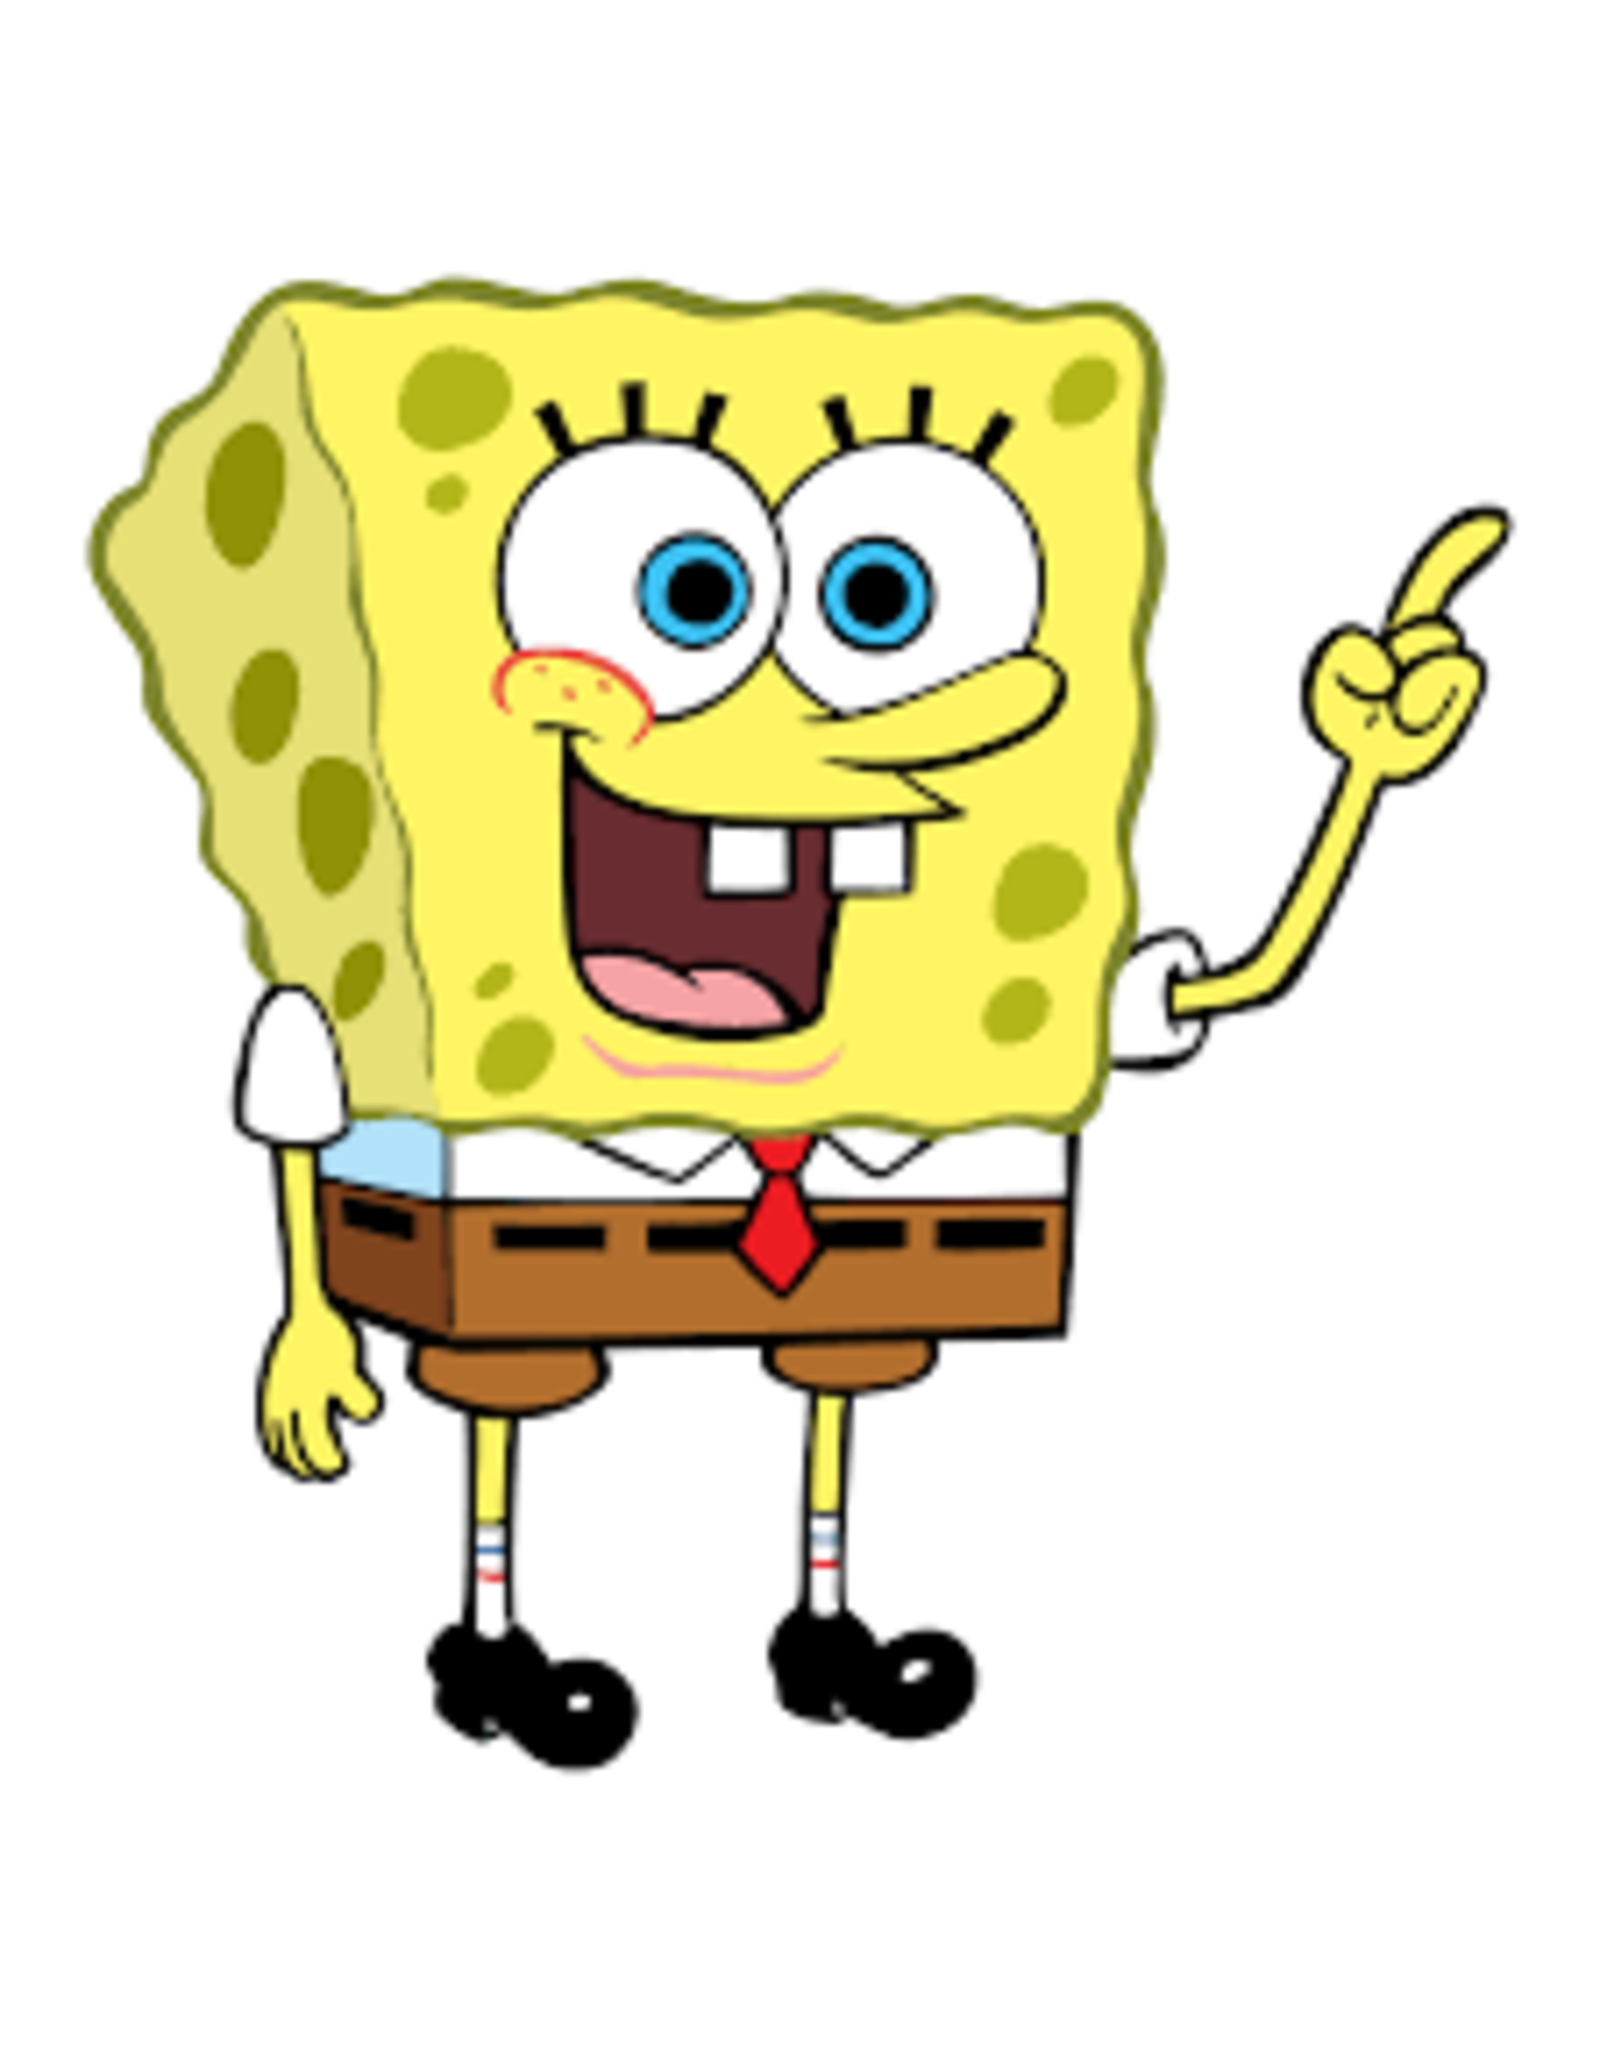 The OP Munchkin: Spongebob Squarepants